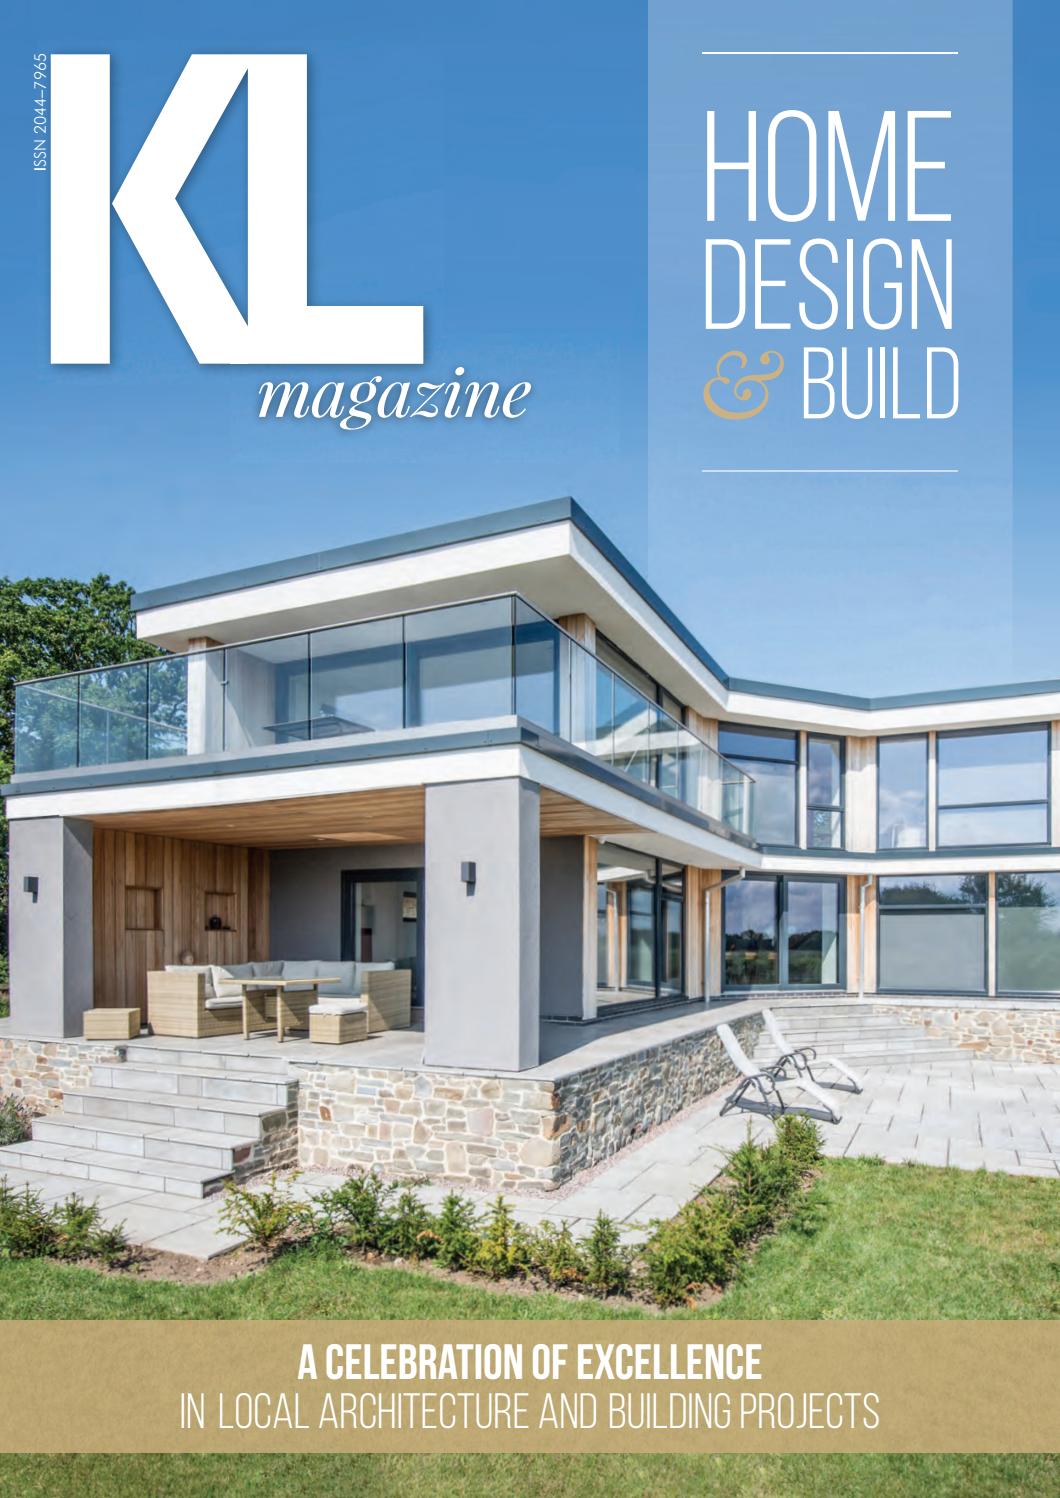 Pergola Alu Brico Depot Nouveau Kl Magazine Home Design & Build 2019 20 by Kl Magazine issuu